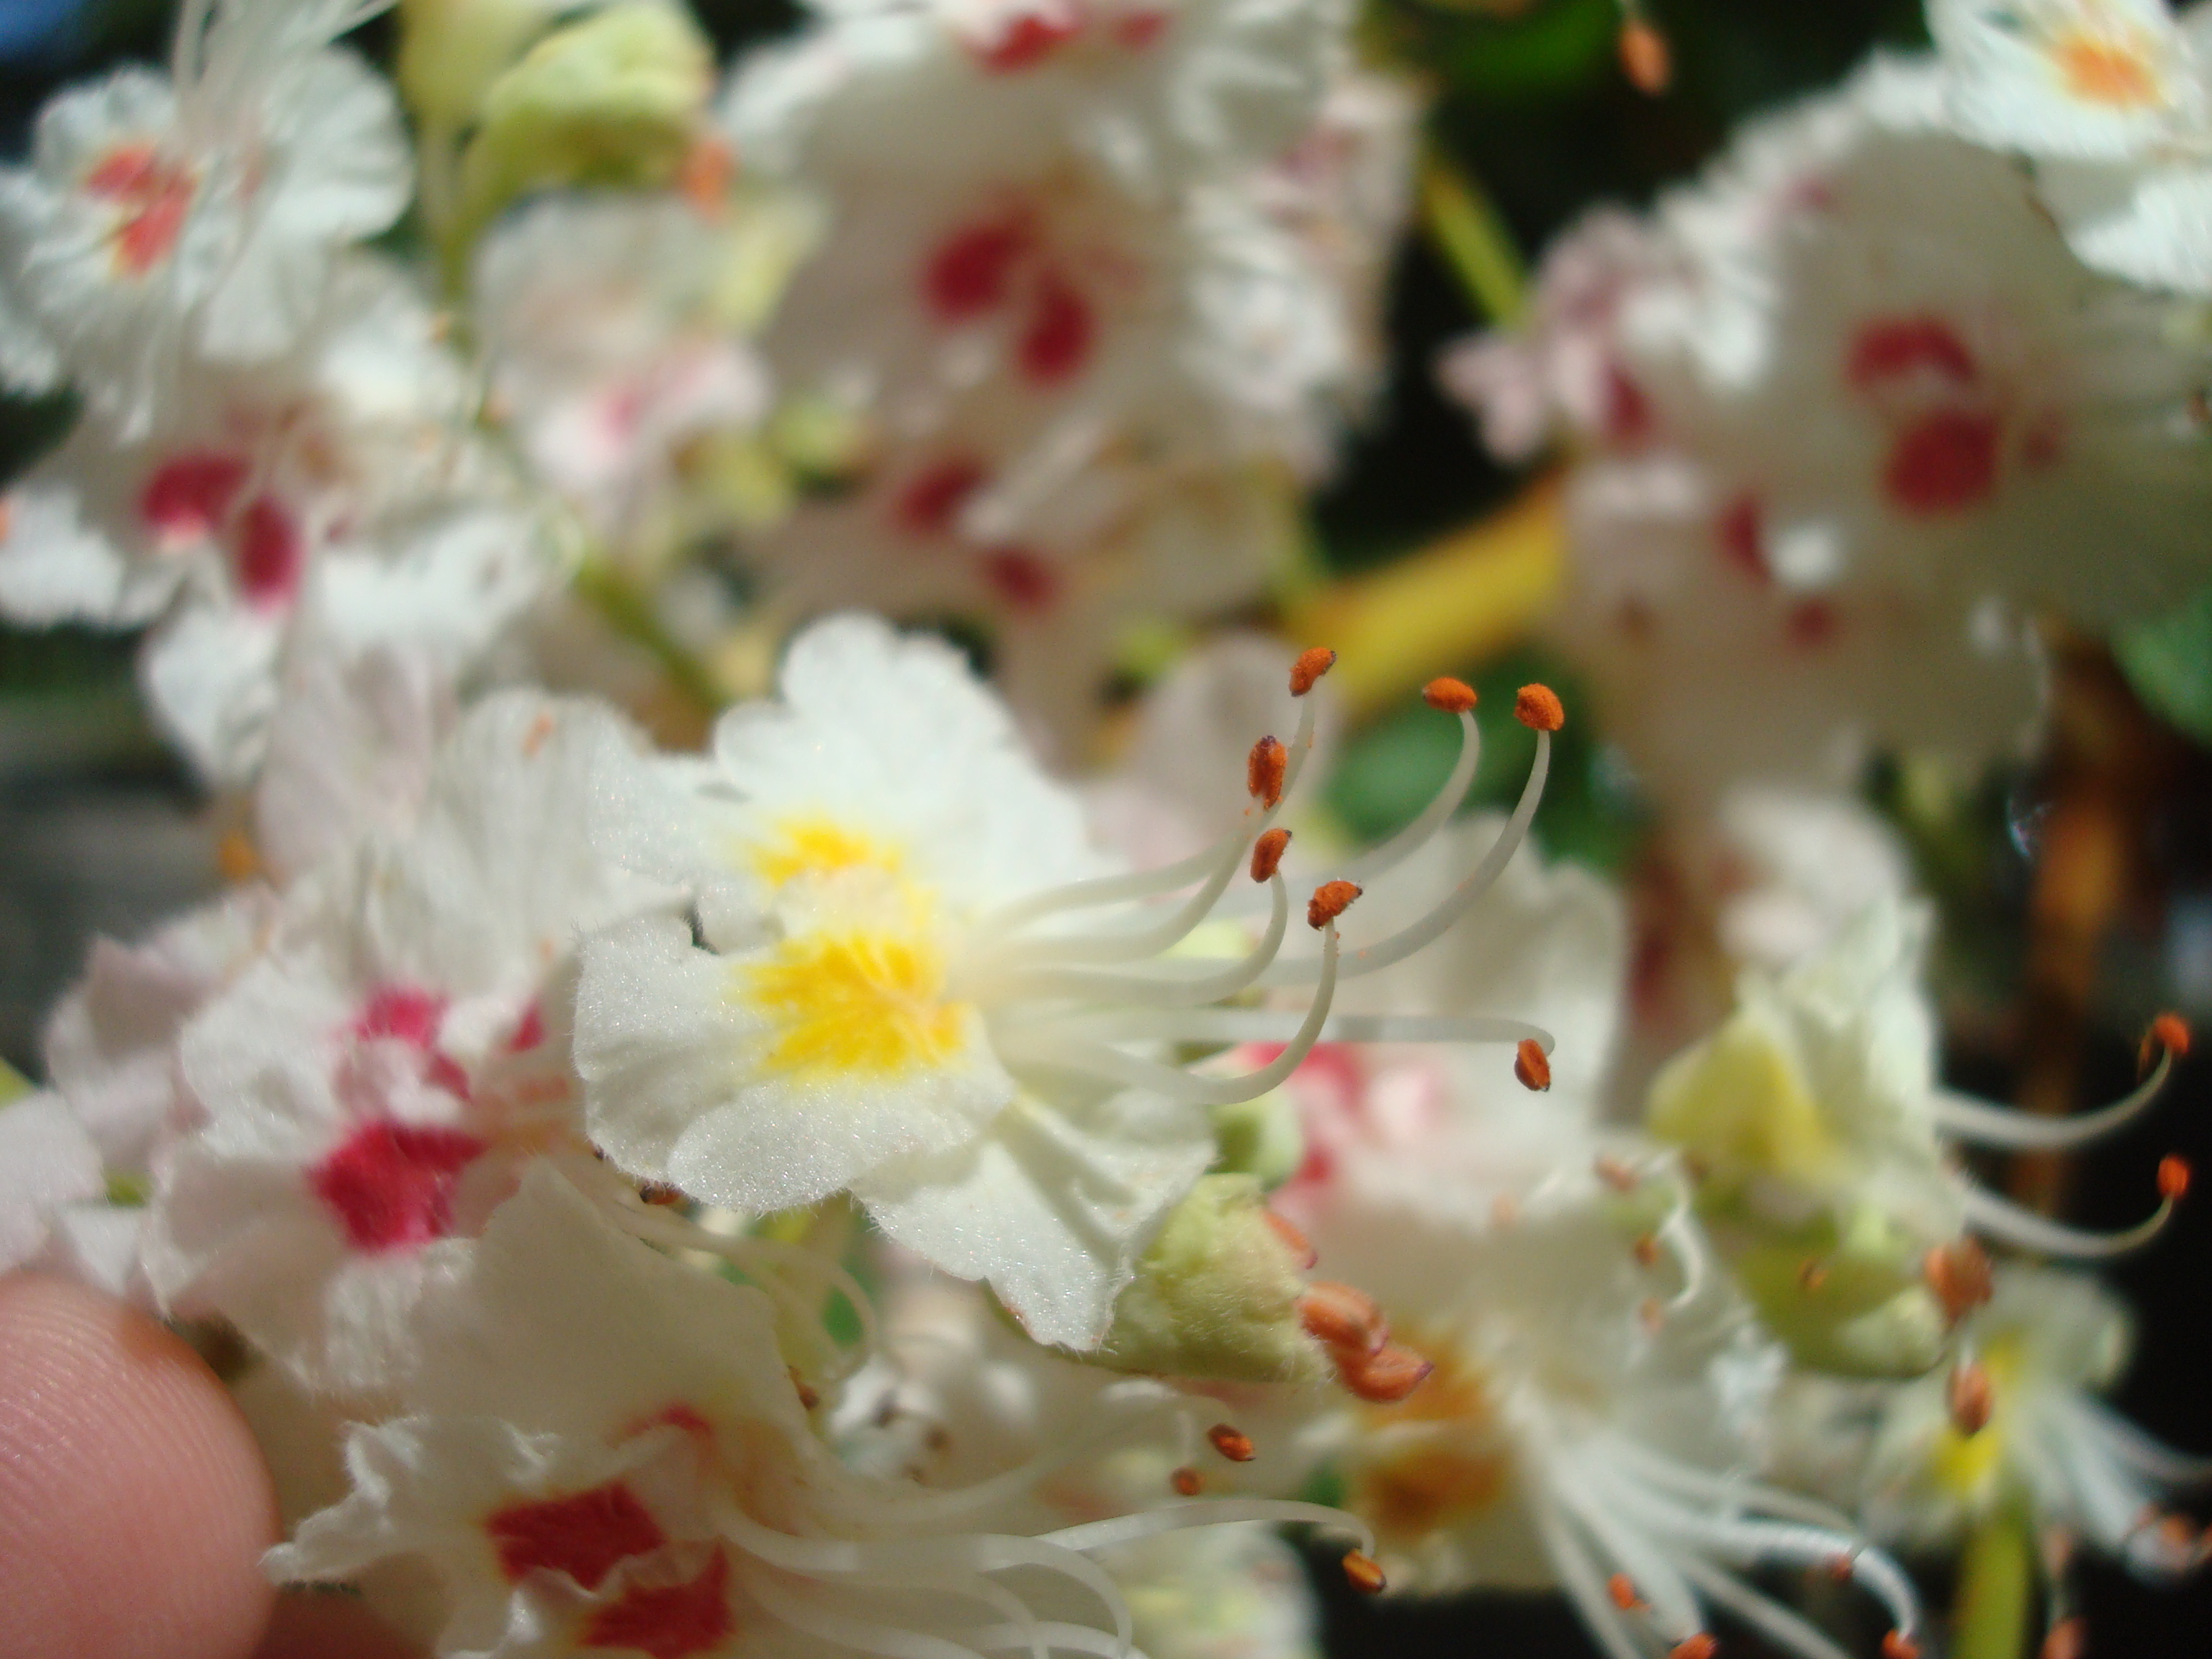 Chestnut blossom photo